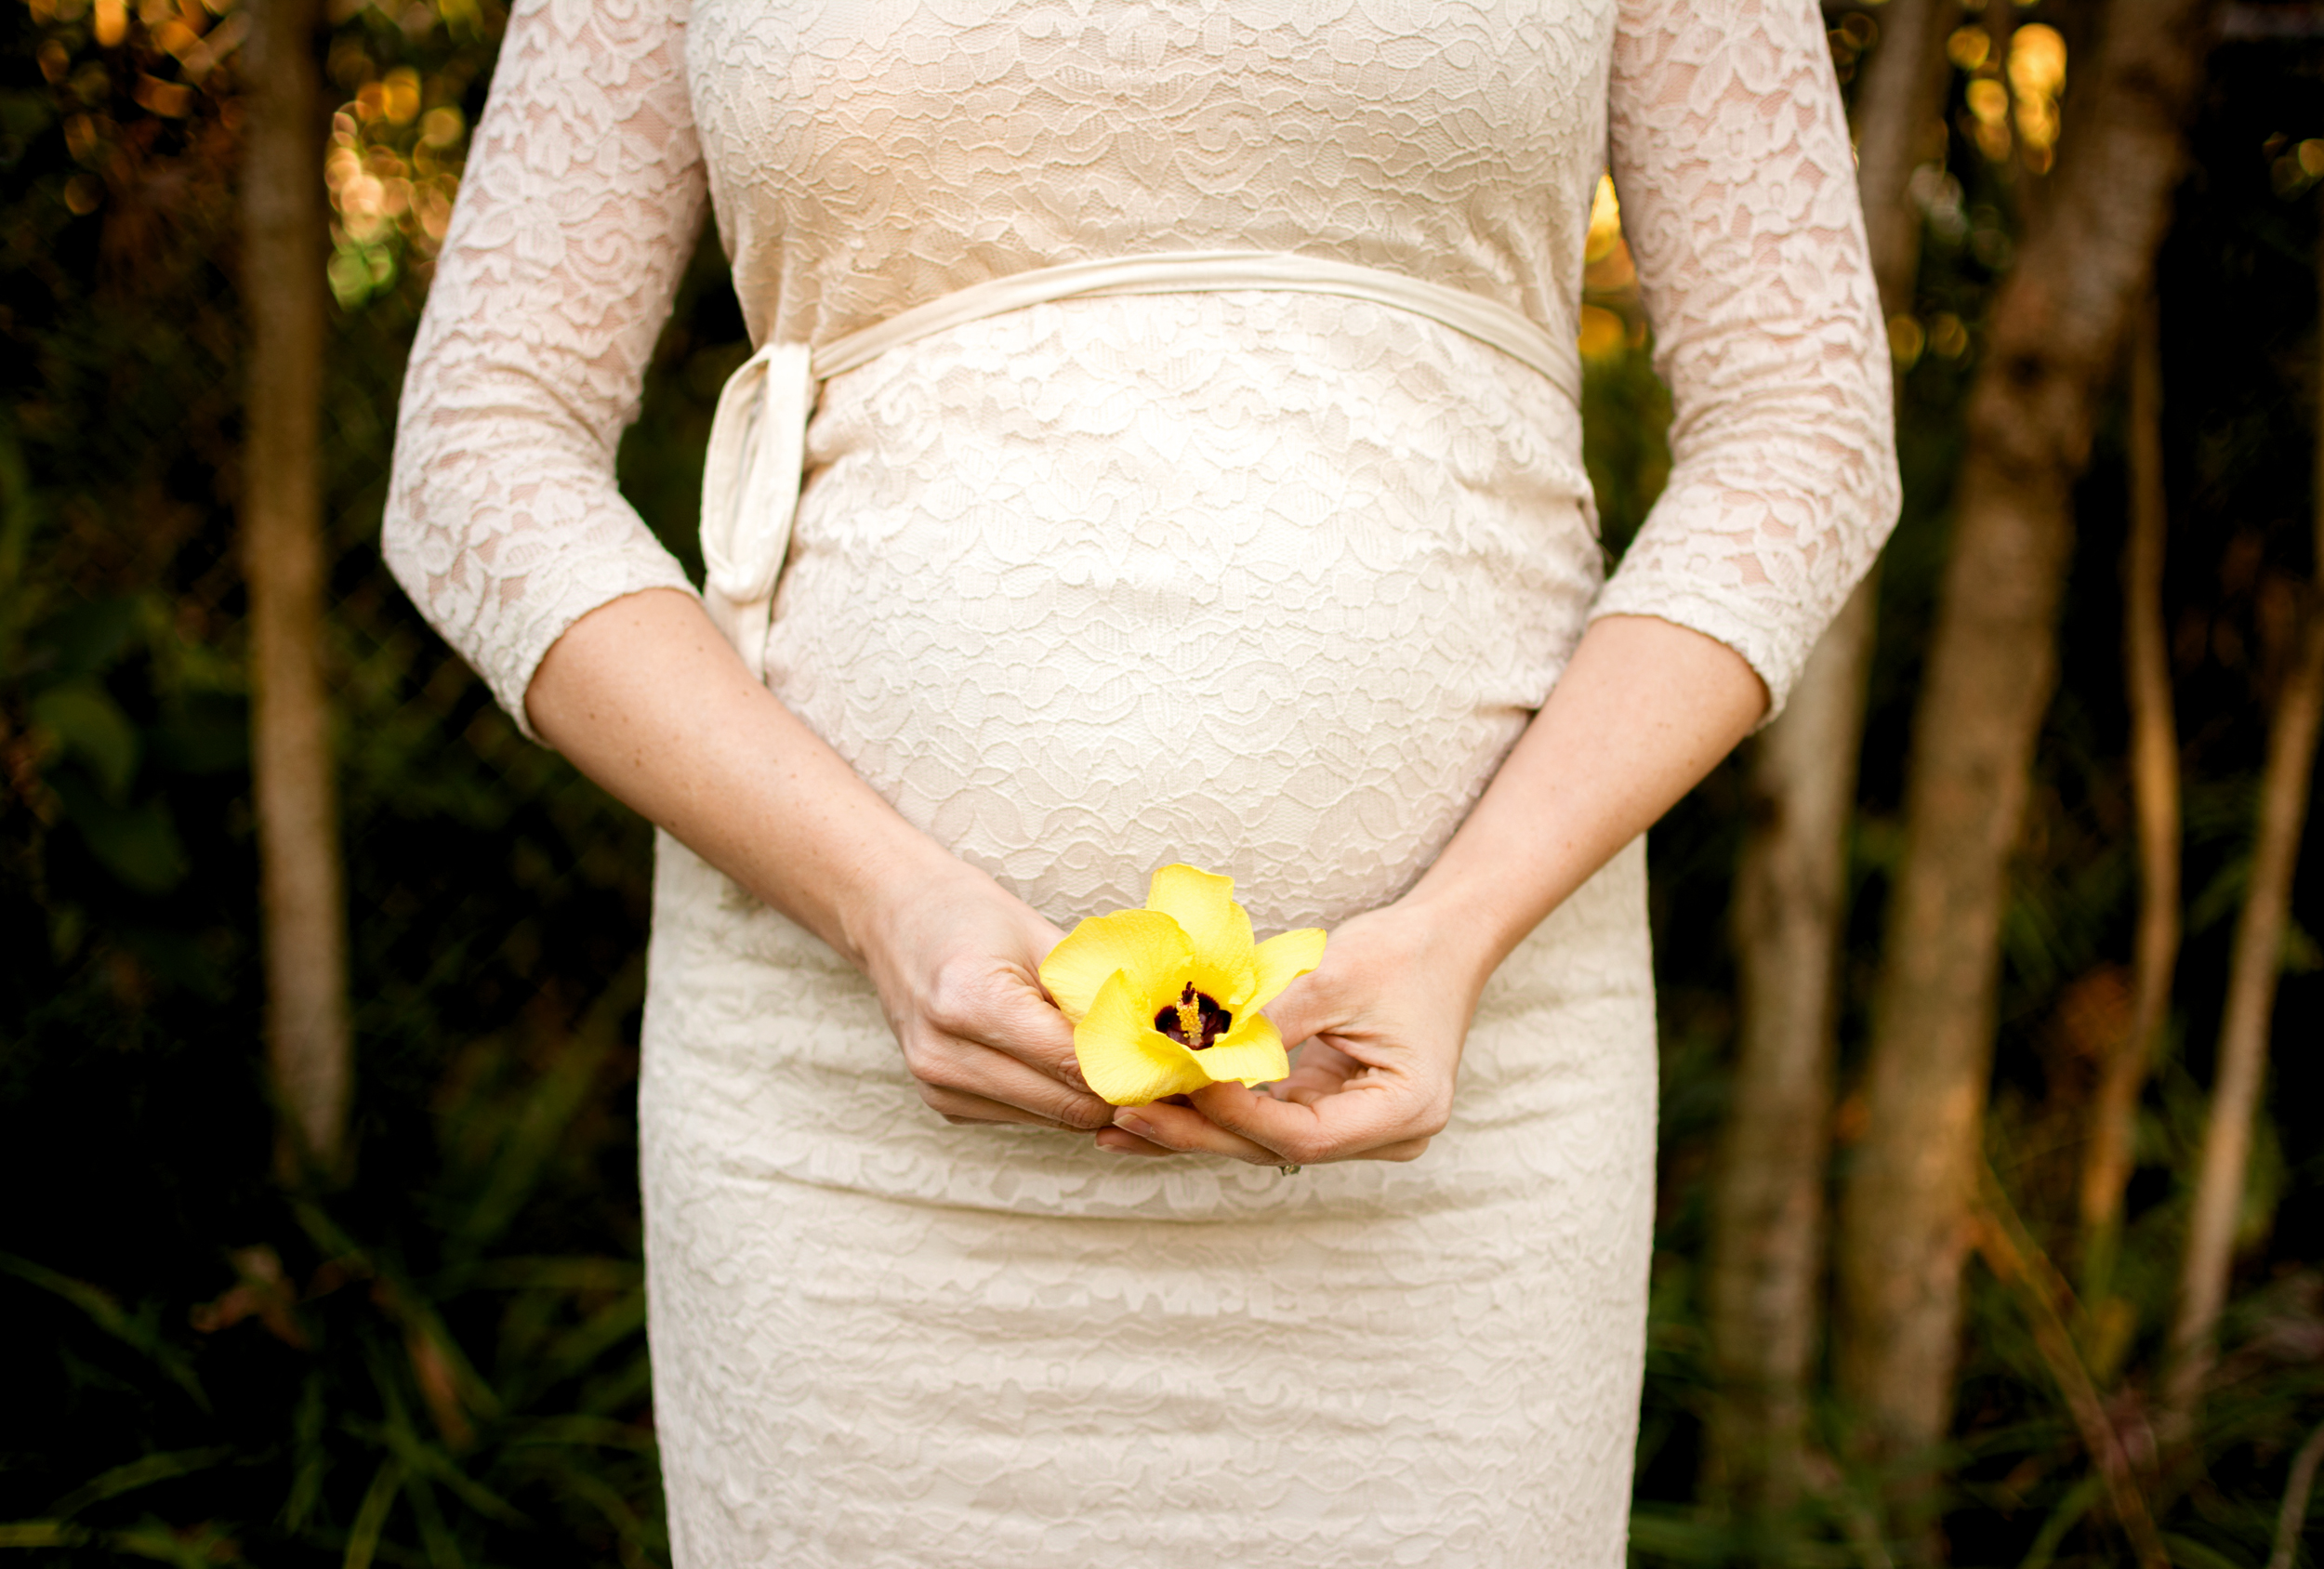 Carlie-Chew-Photography-Maternity-Photographer-Tampa-Florida